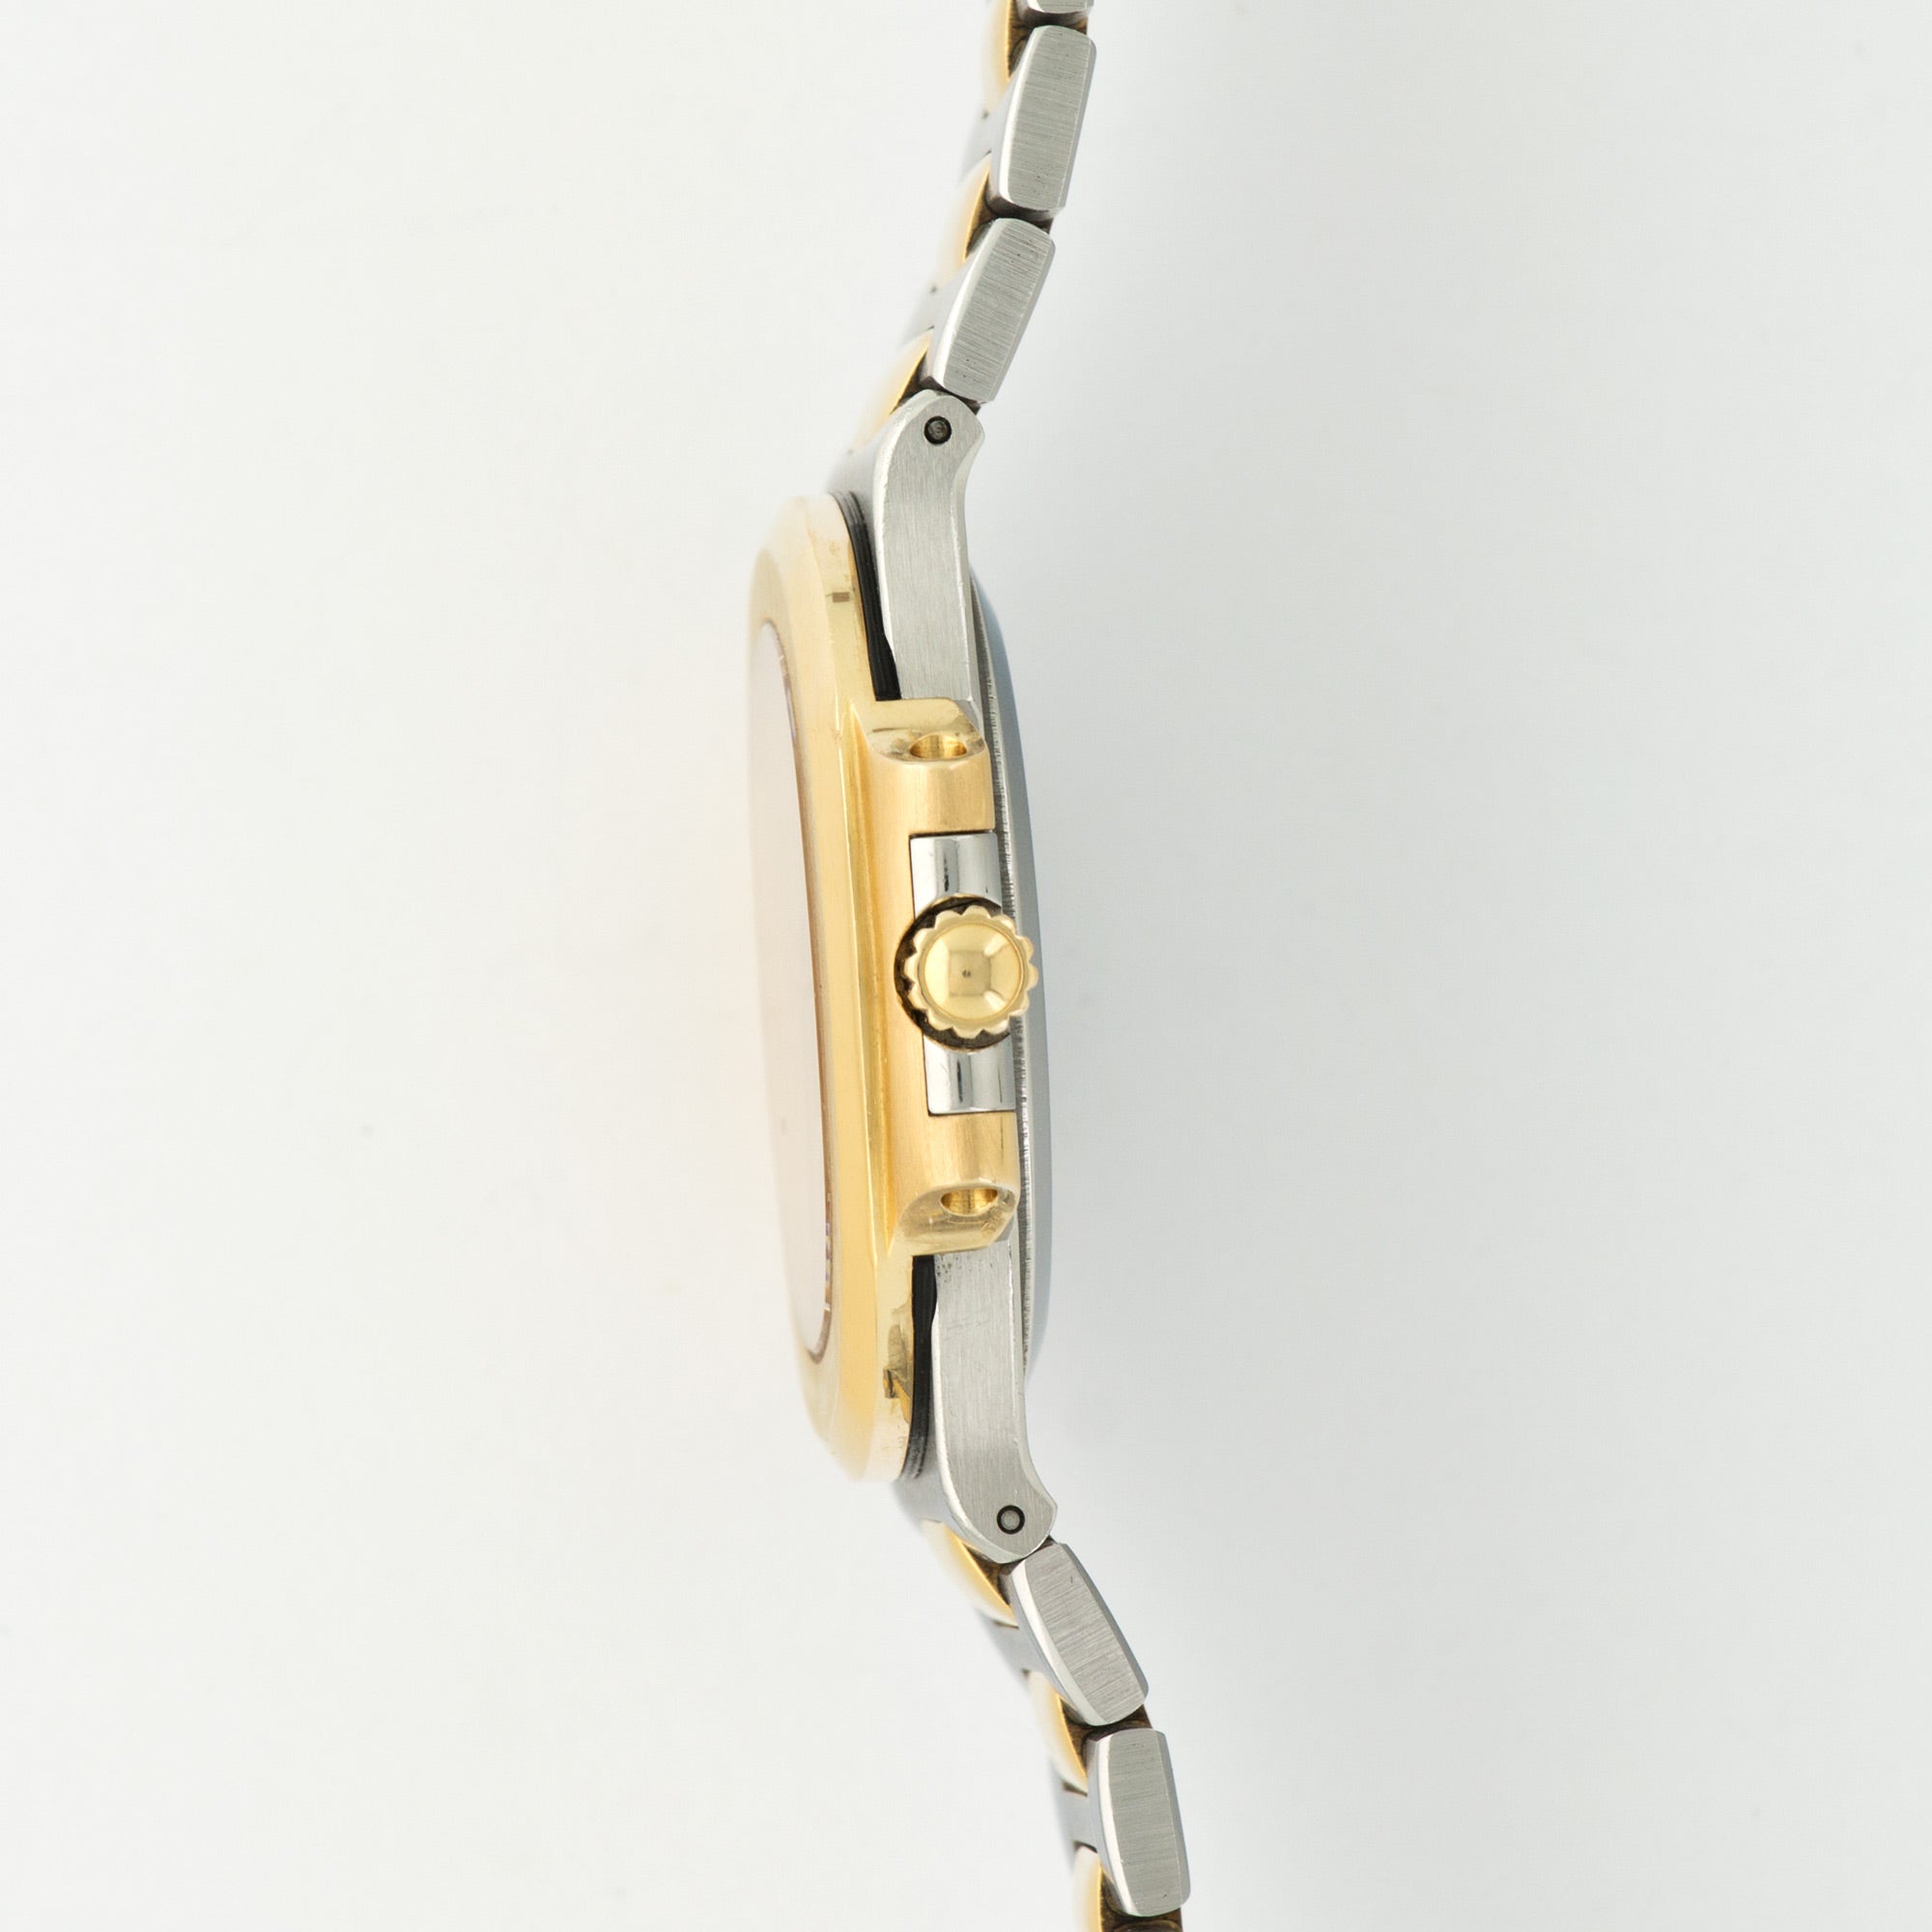 Patek Philippe - Patek Philippe Two-Tone Nautilus Watch Ref. 3800 - The Keystone Watches